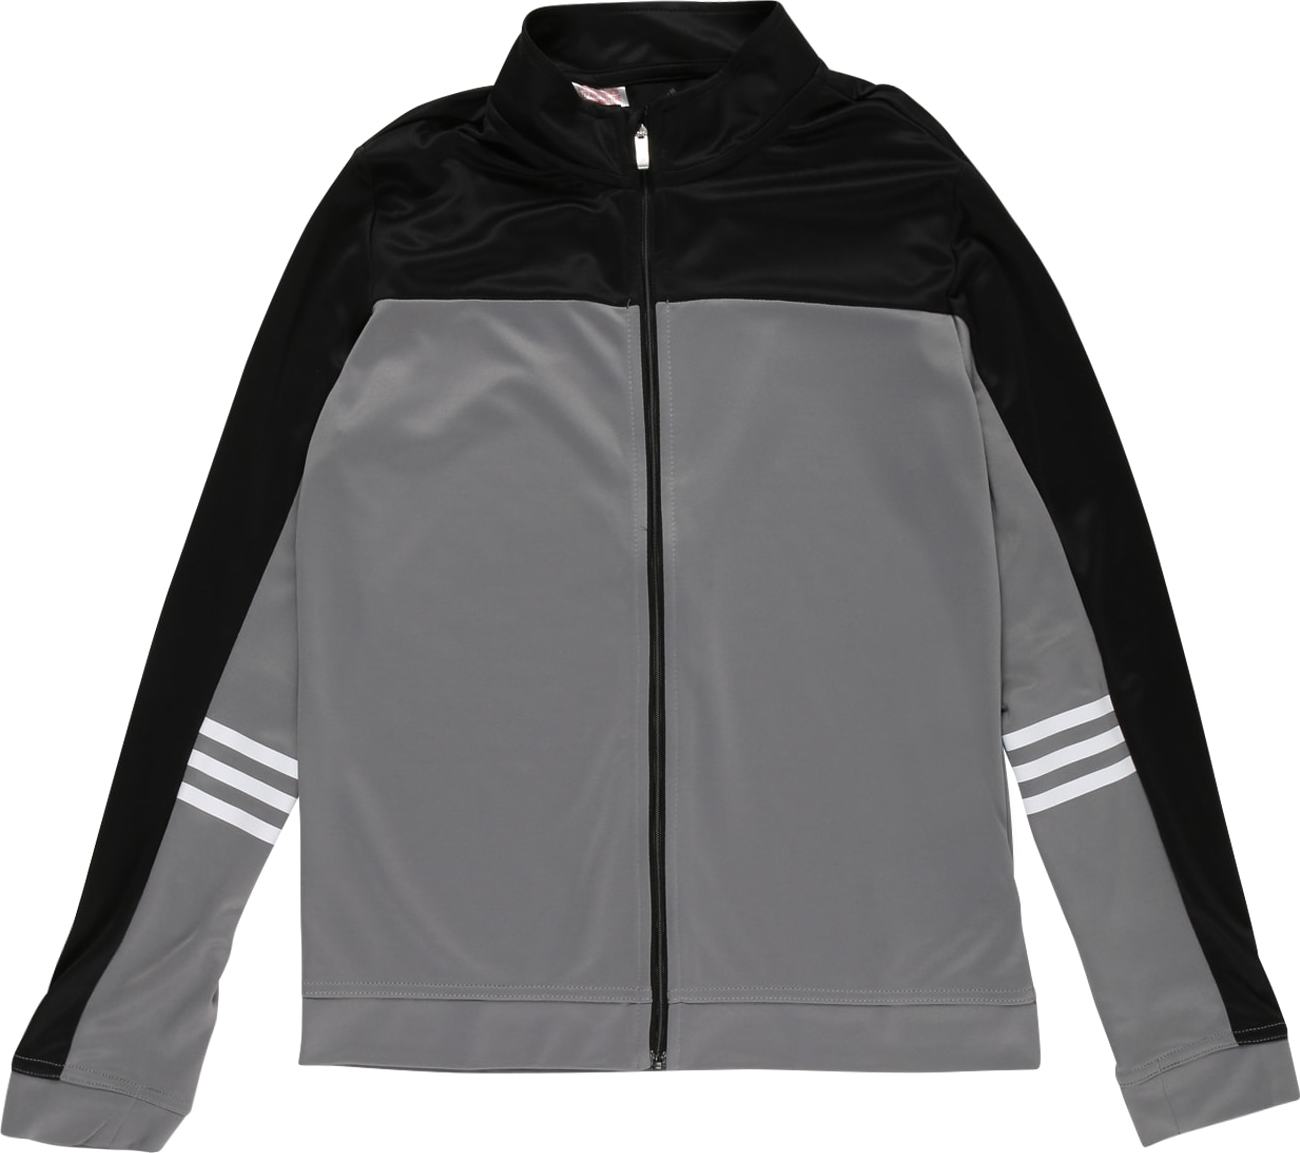 Sportovní bunda adidas Golf šedá / černá / bílá